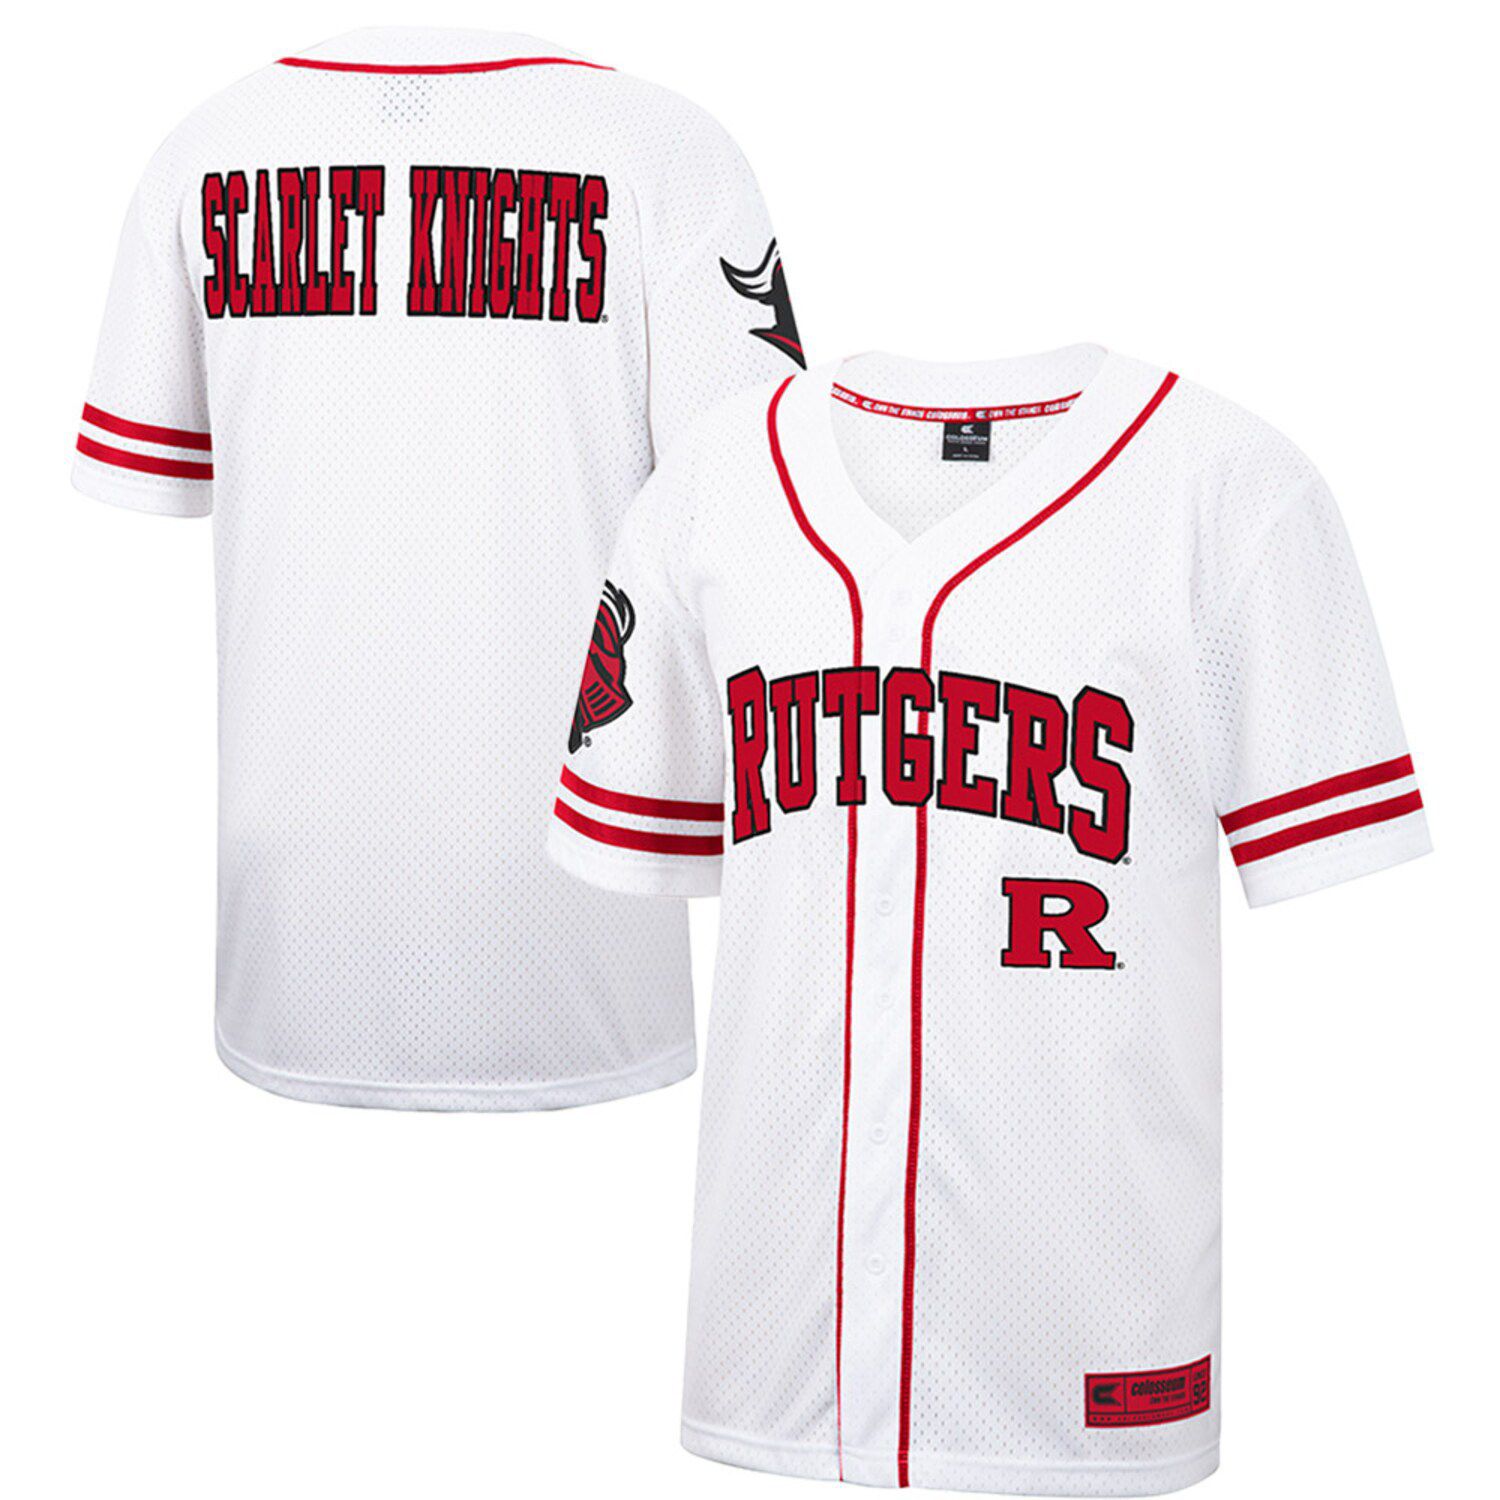 Rutgers Scarlet Knights soccer gear